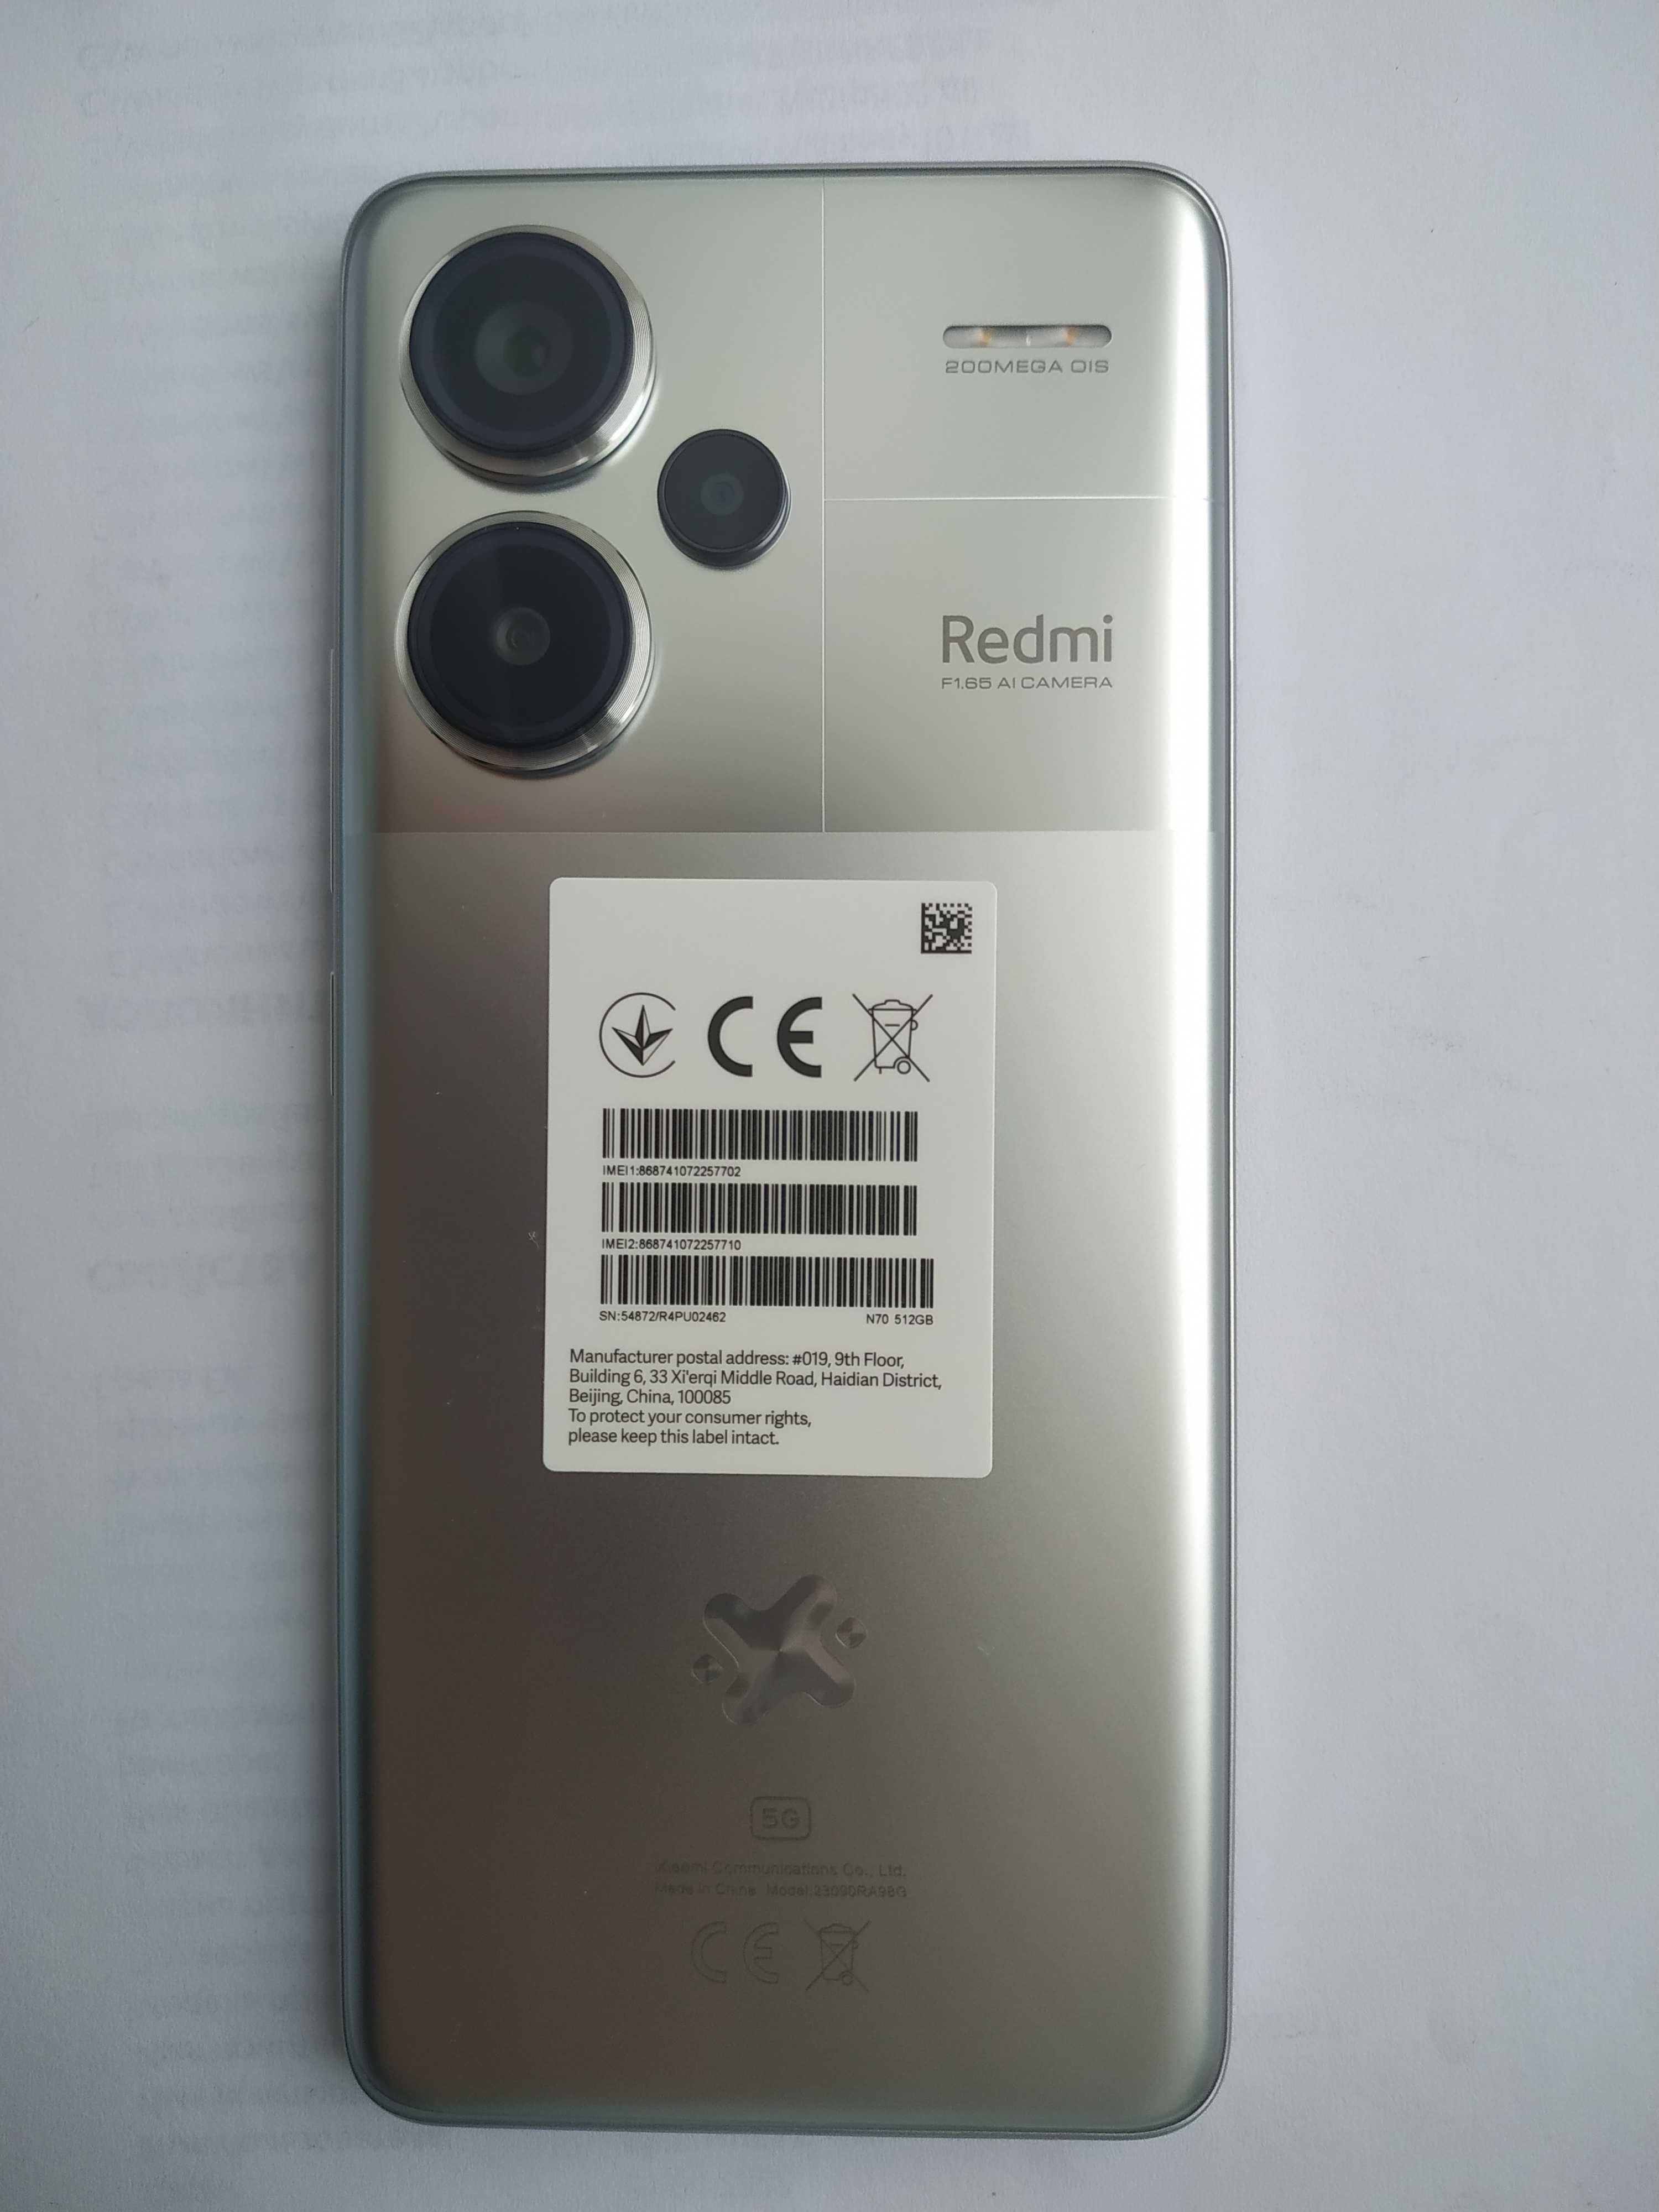 Продам Xiaomi Redmi Note 13 Pro+ 5G 12/512 Mystic Silver ексклюзивний.